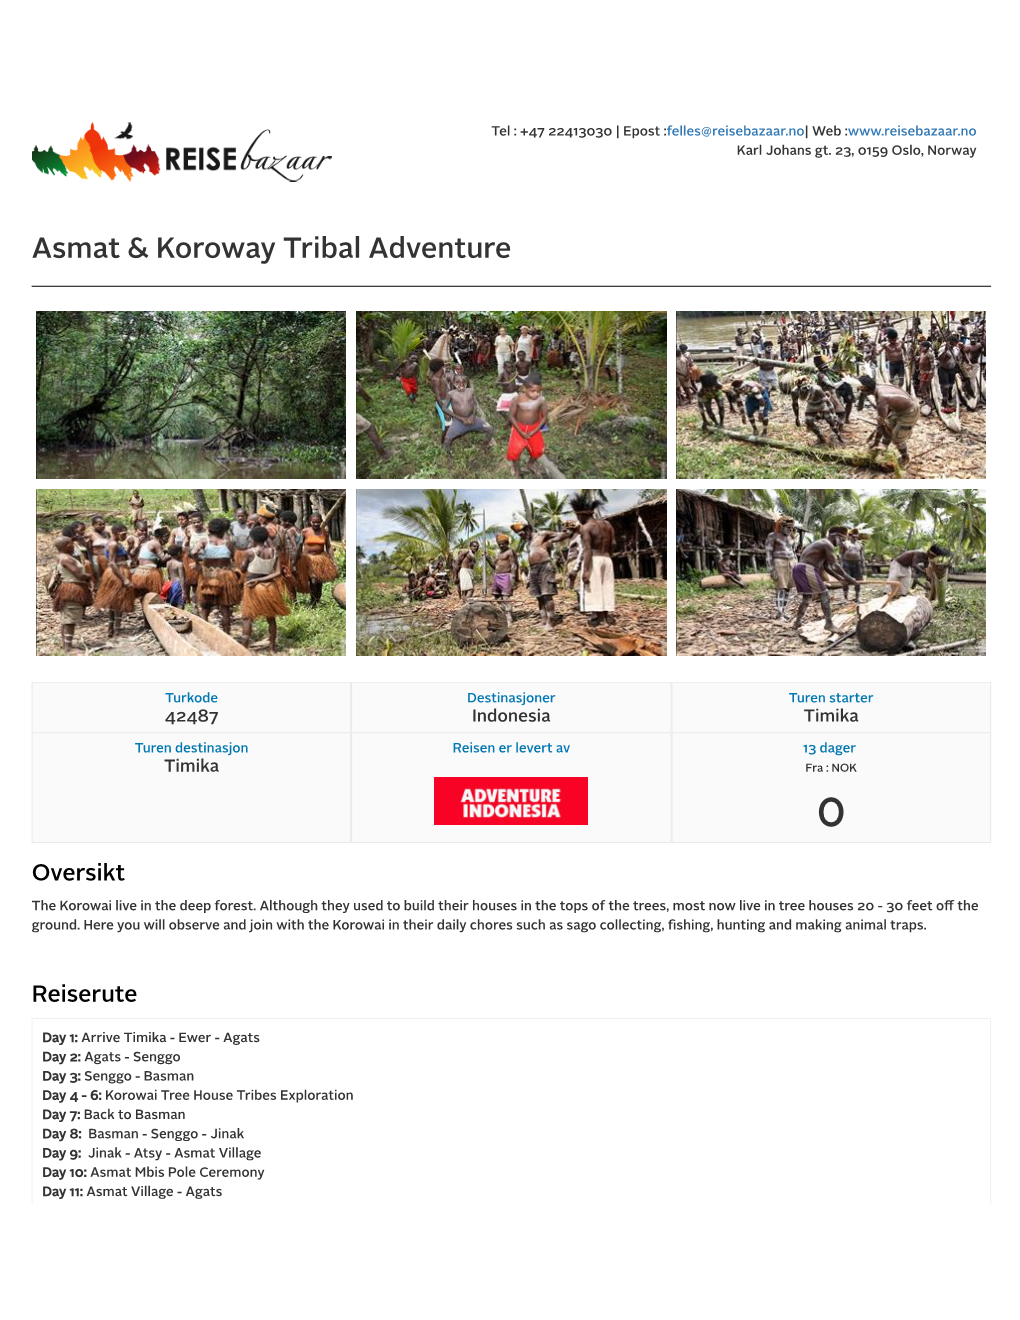 Asmat & Koroway Tribal Adventure